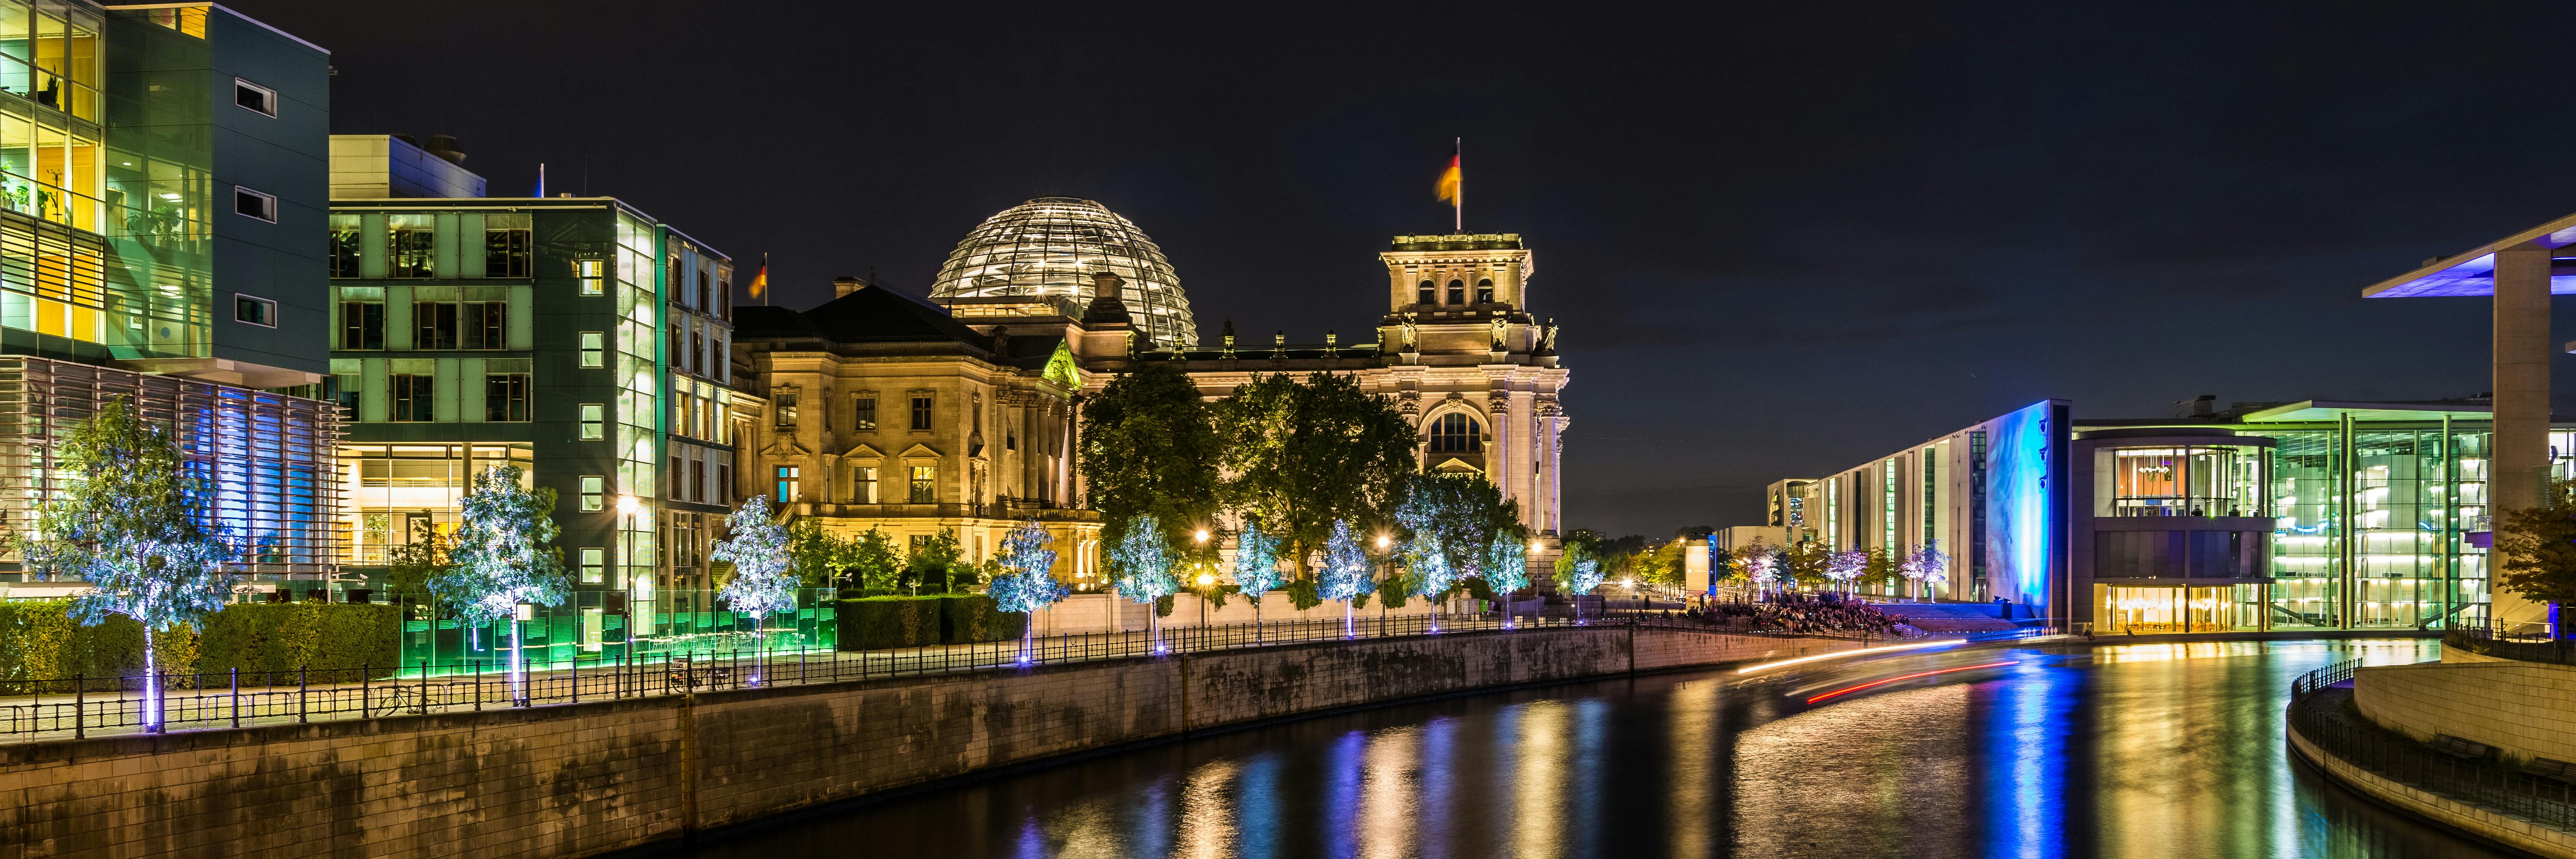 Crucero nocturno por Berlín